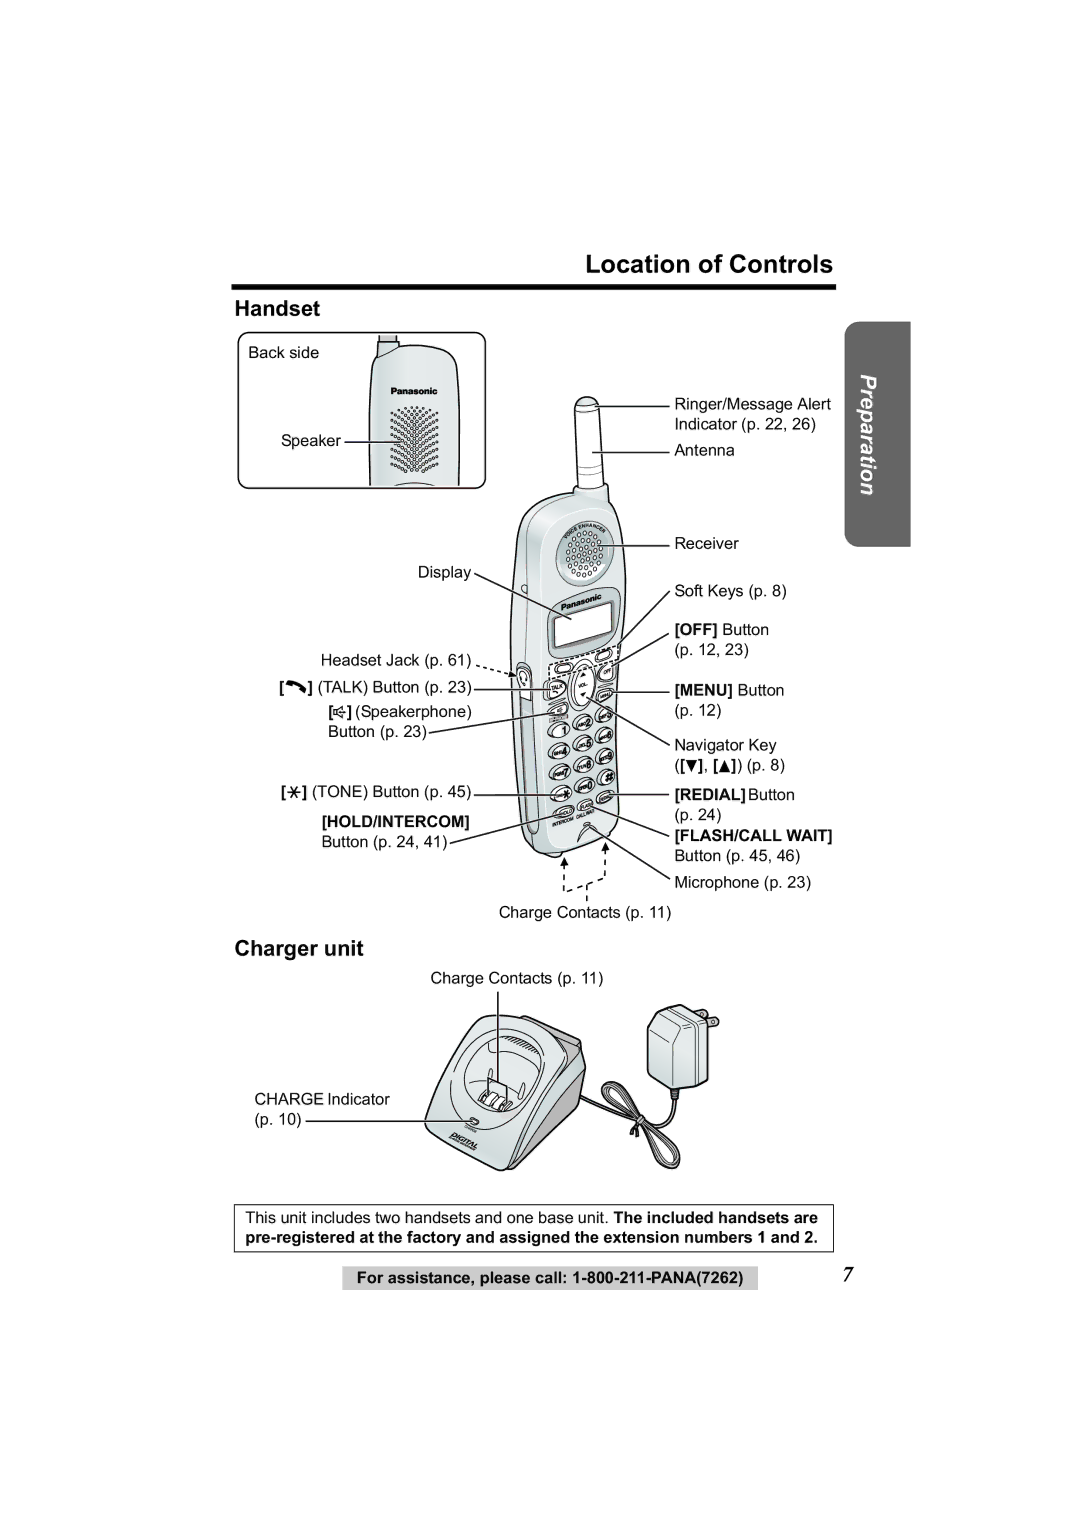 Panasonic KX-TG2344 manual Location of Controls, Handset, Charger unit 